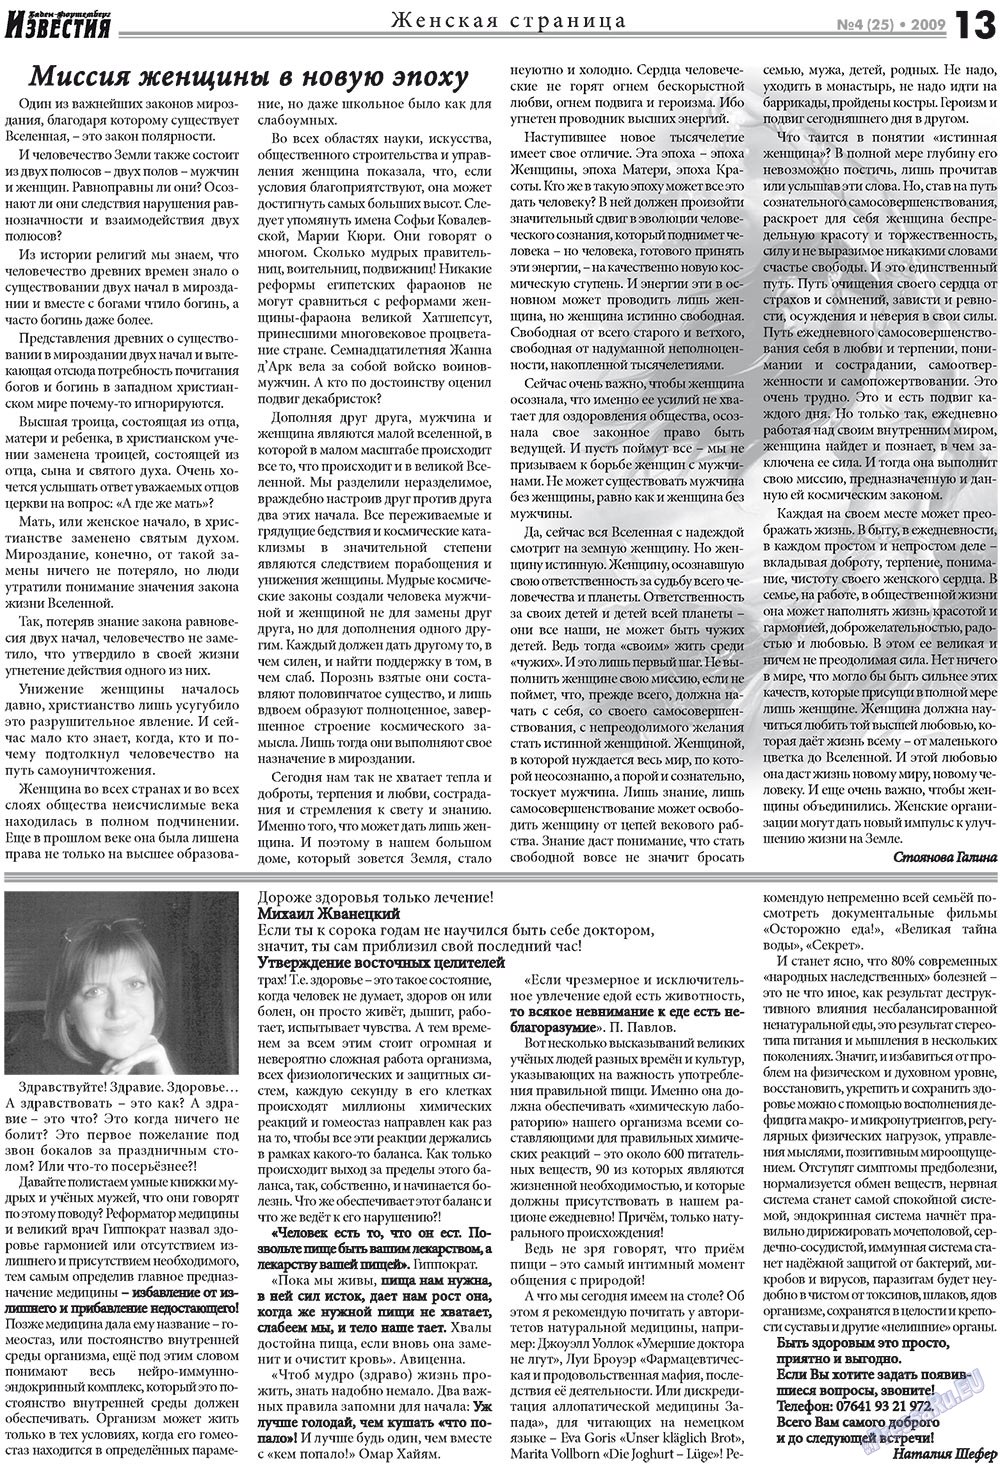 Известия BW (газета). 2009 год, номер 4, стр. 13